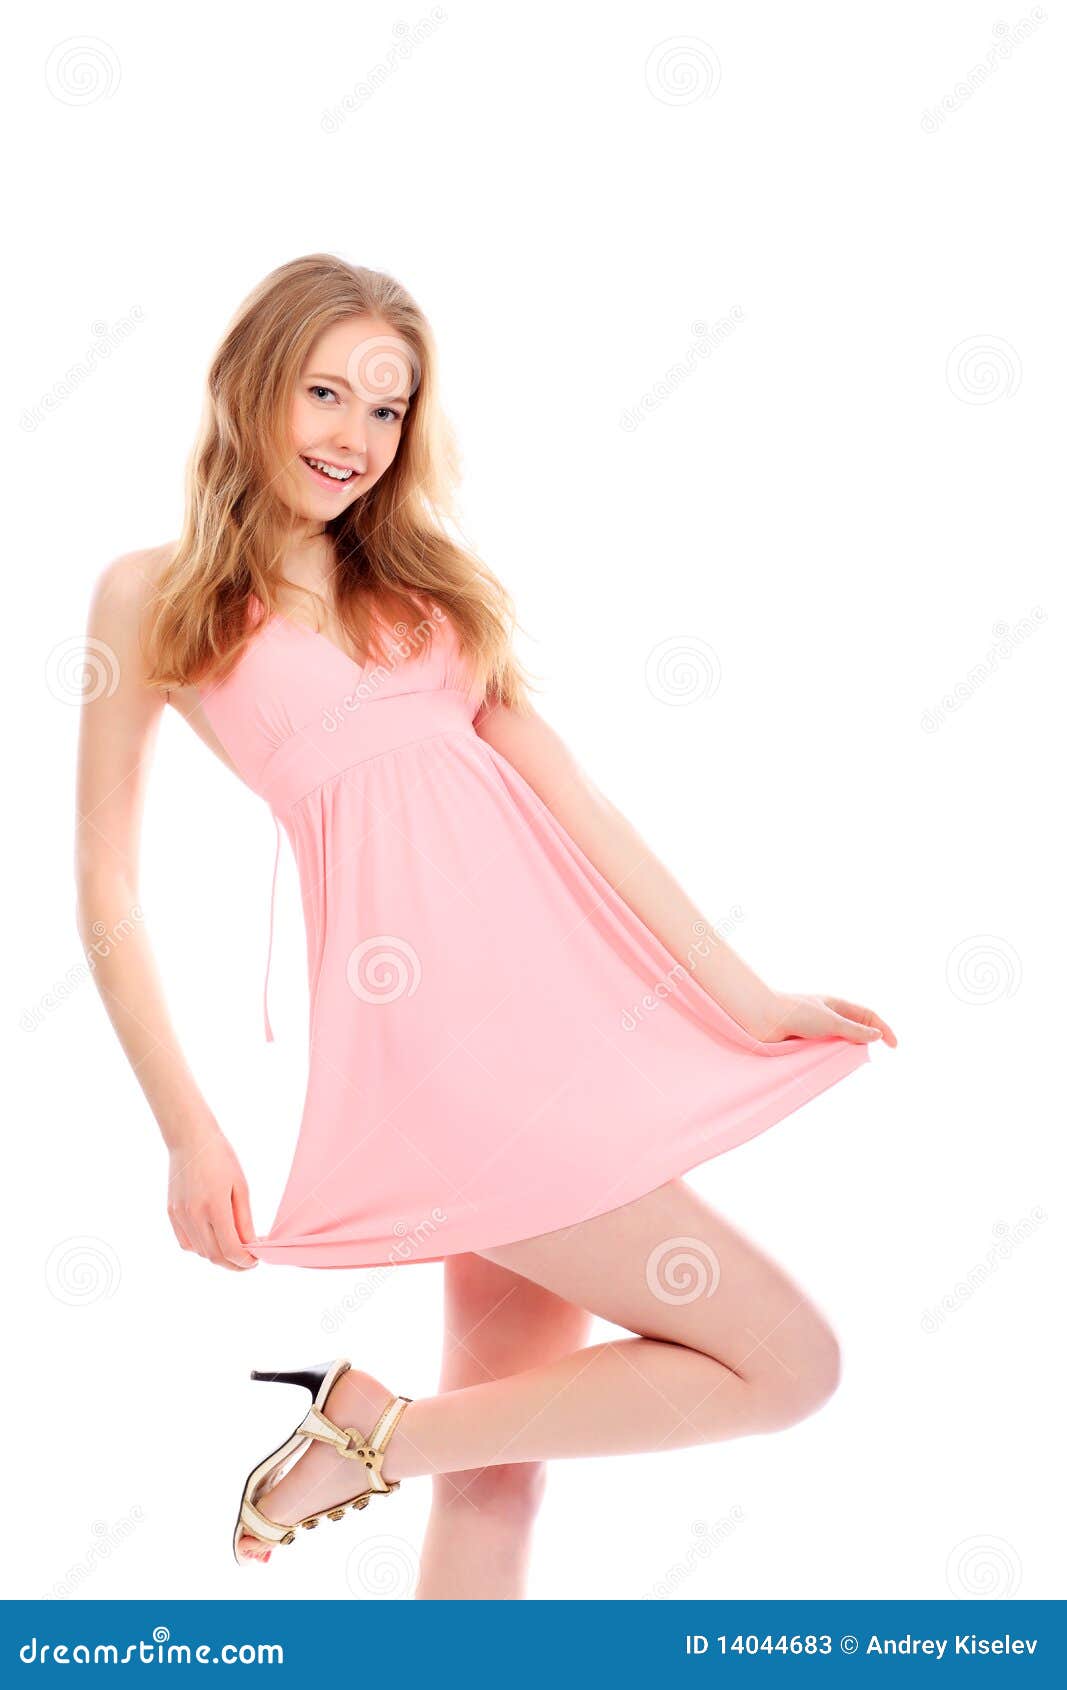 Light dress stock image. Image of fashion, romantic, person - 14044683